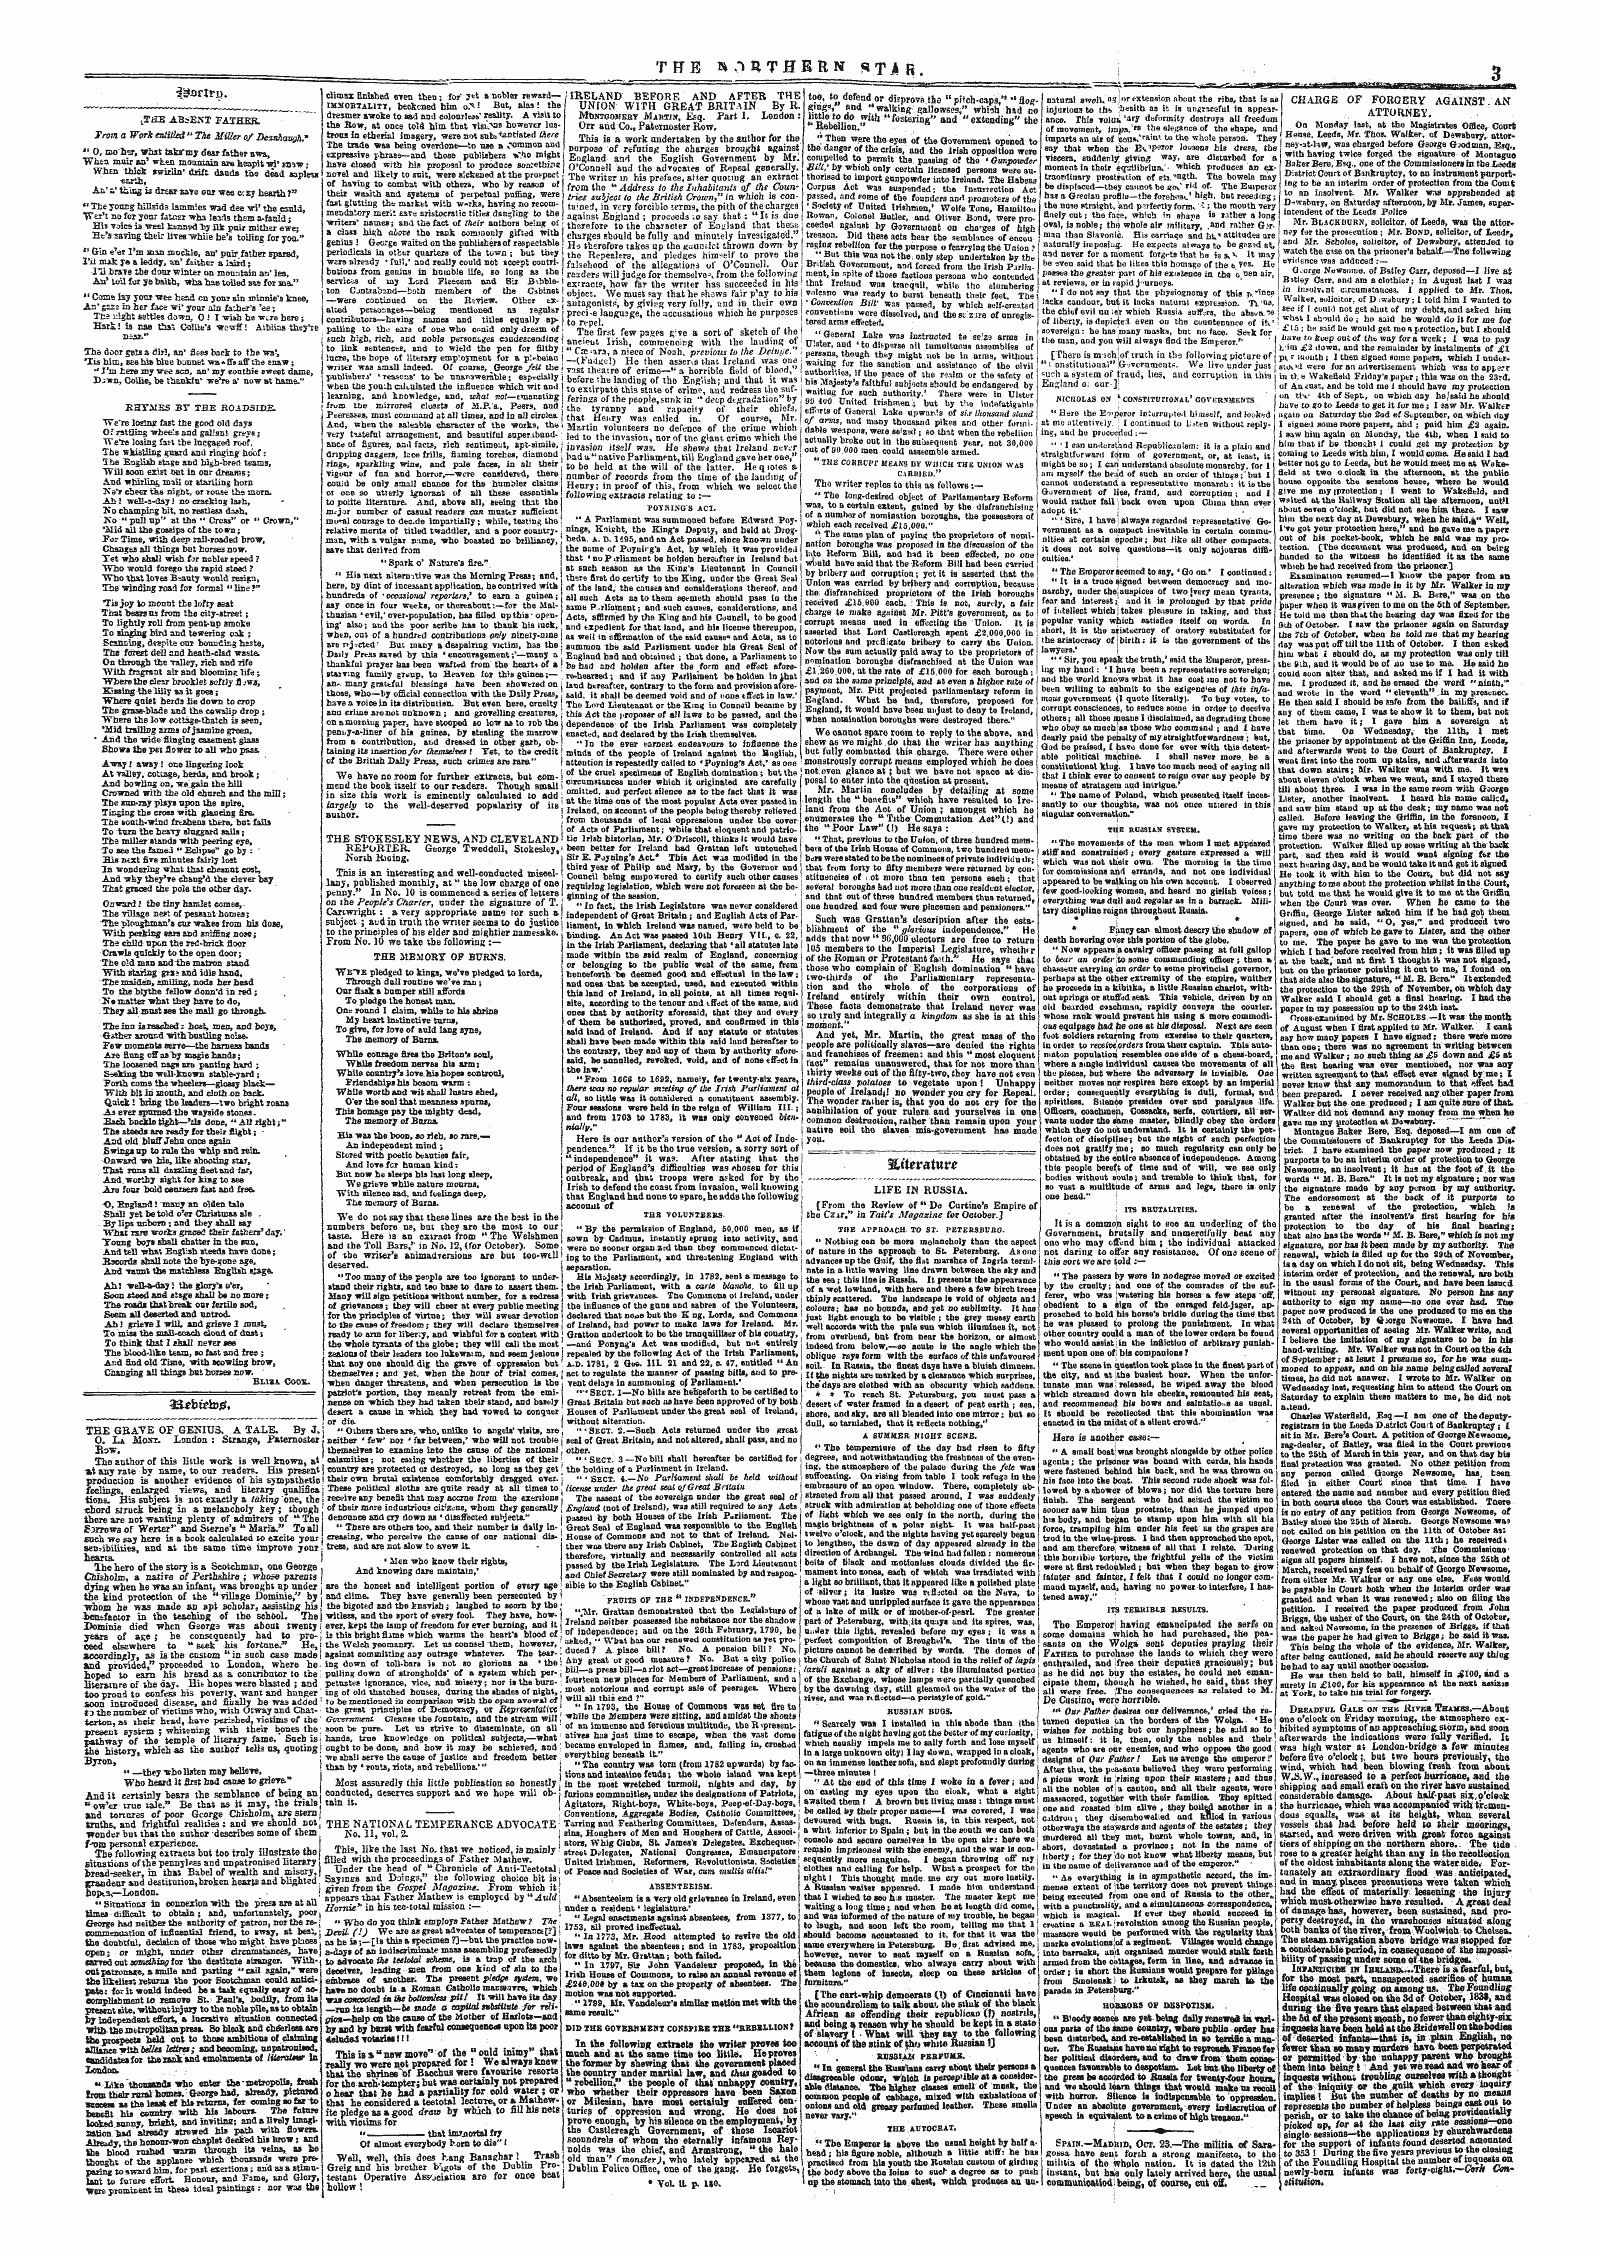 Northern Star (1837-1852): jS F Y, 5th edition - 533ftr«.